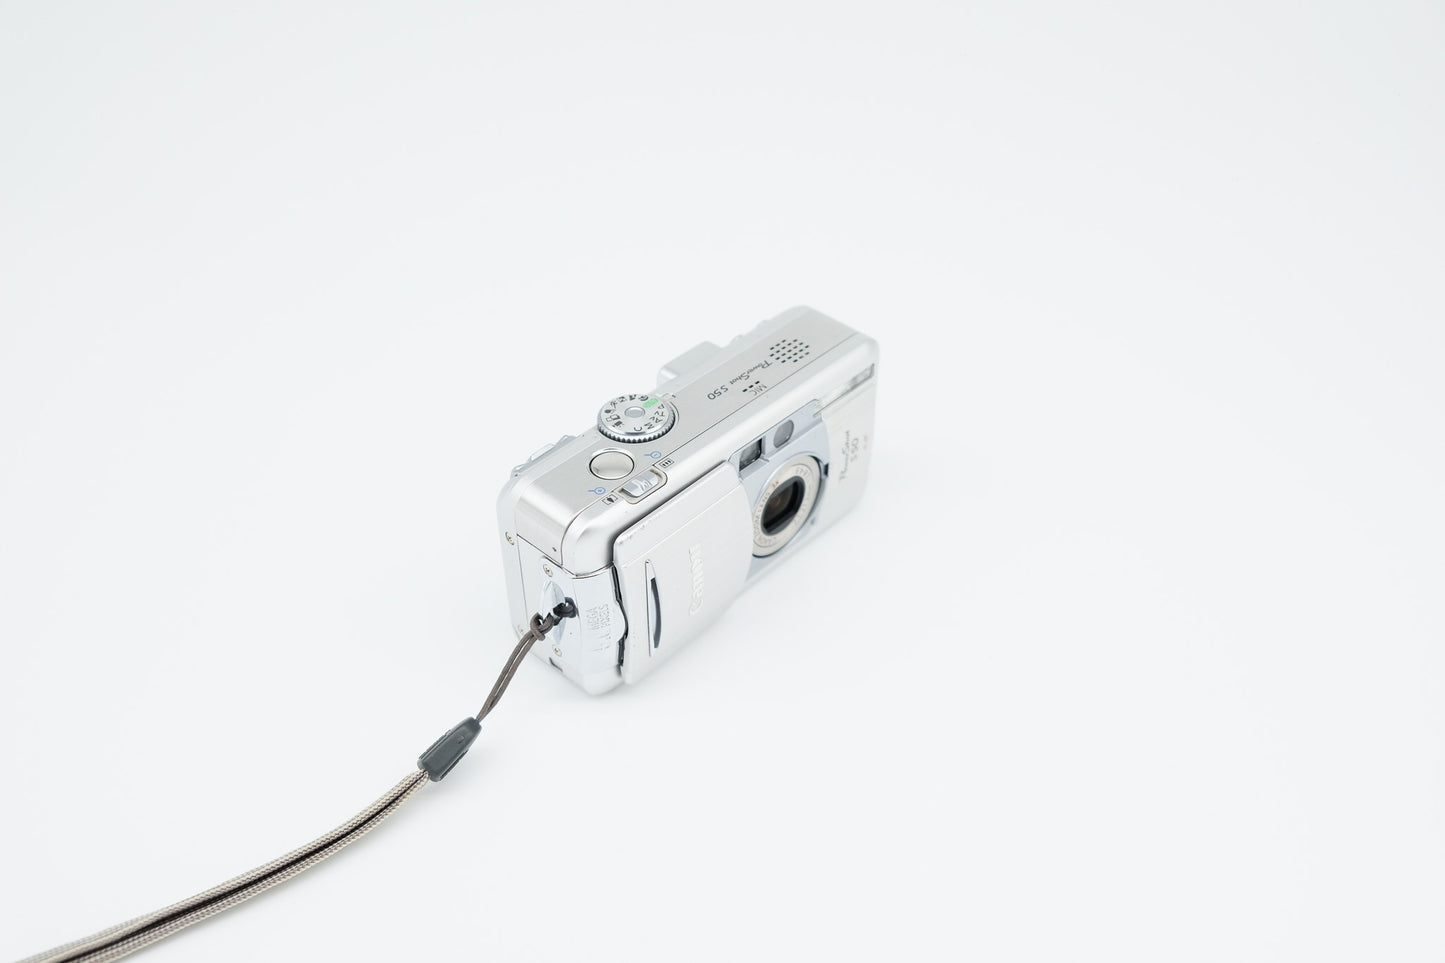 Canon PowerShot S50 - Digicam